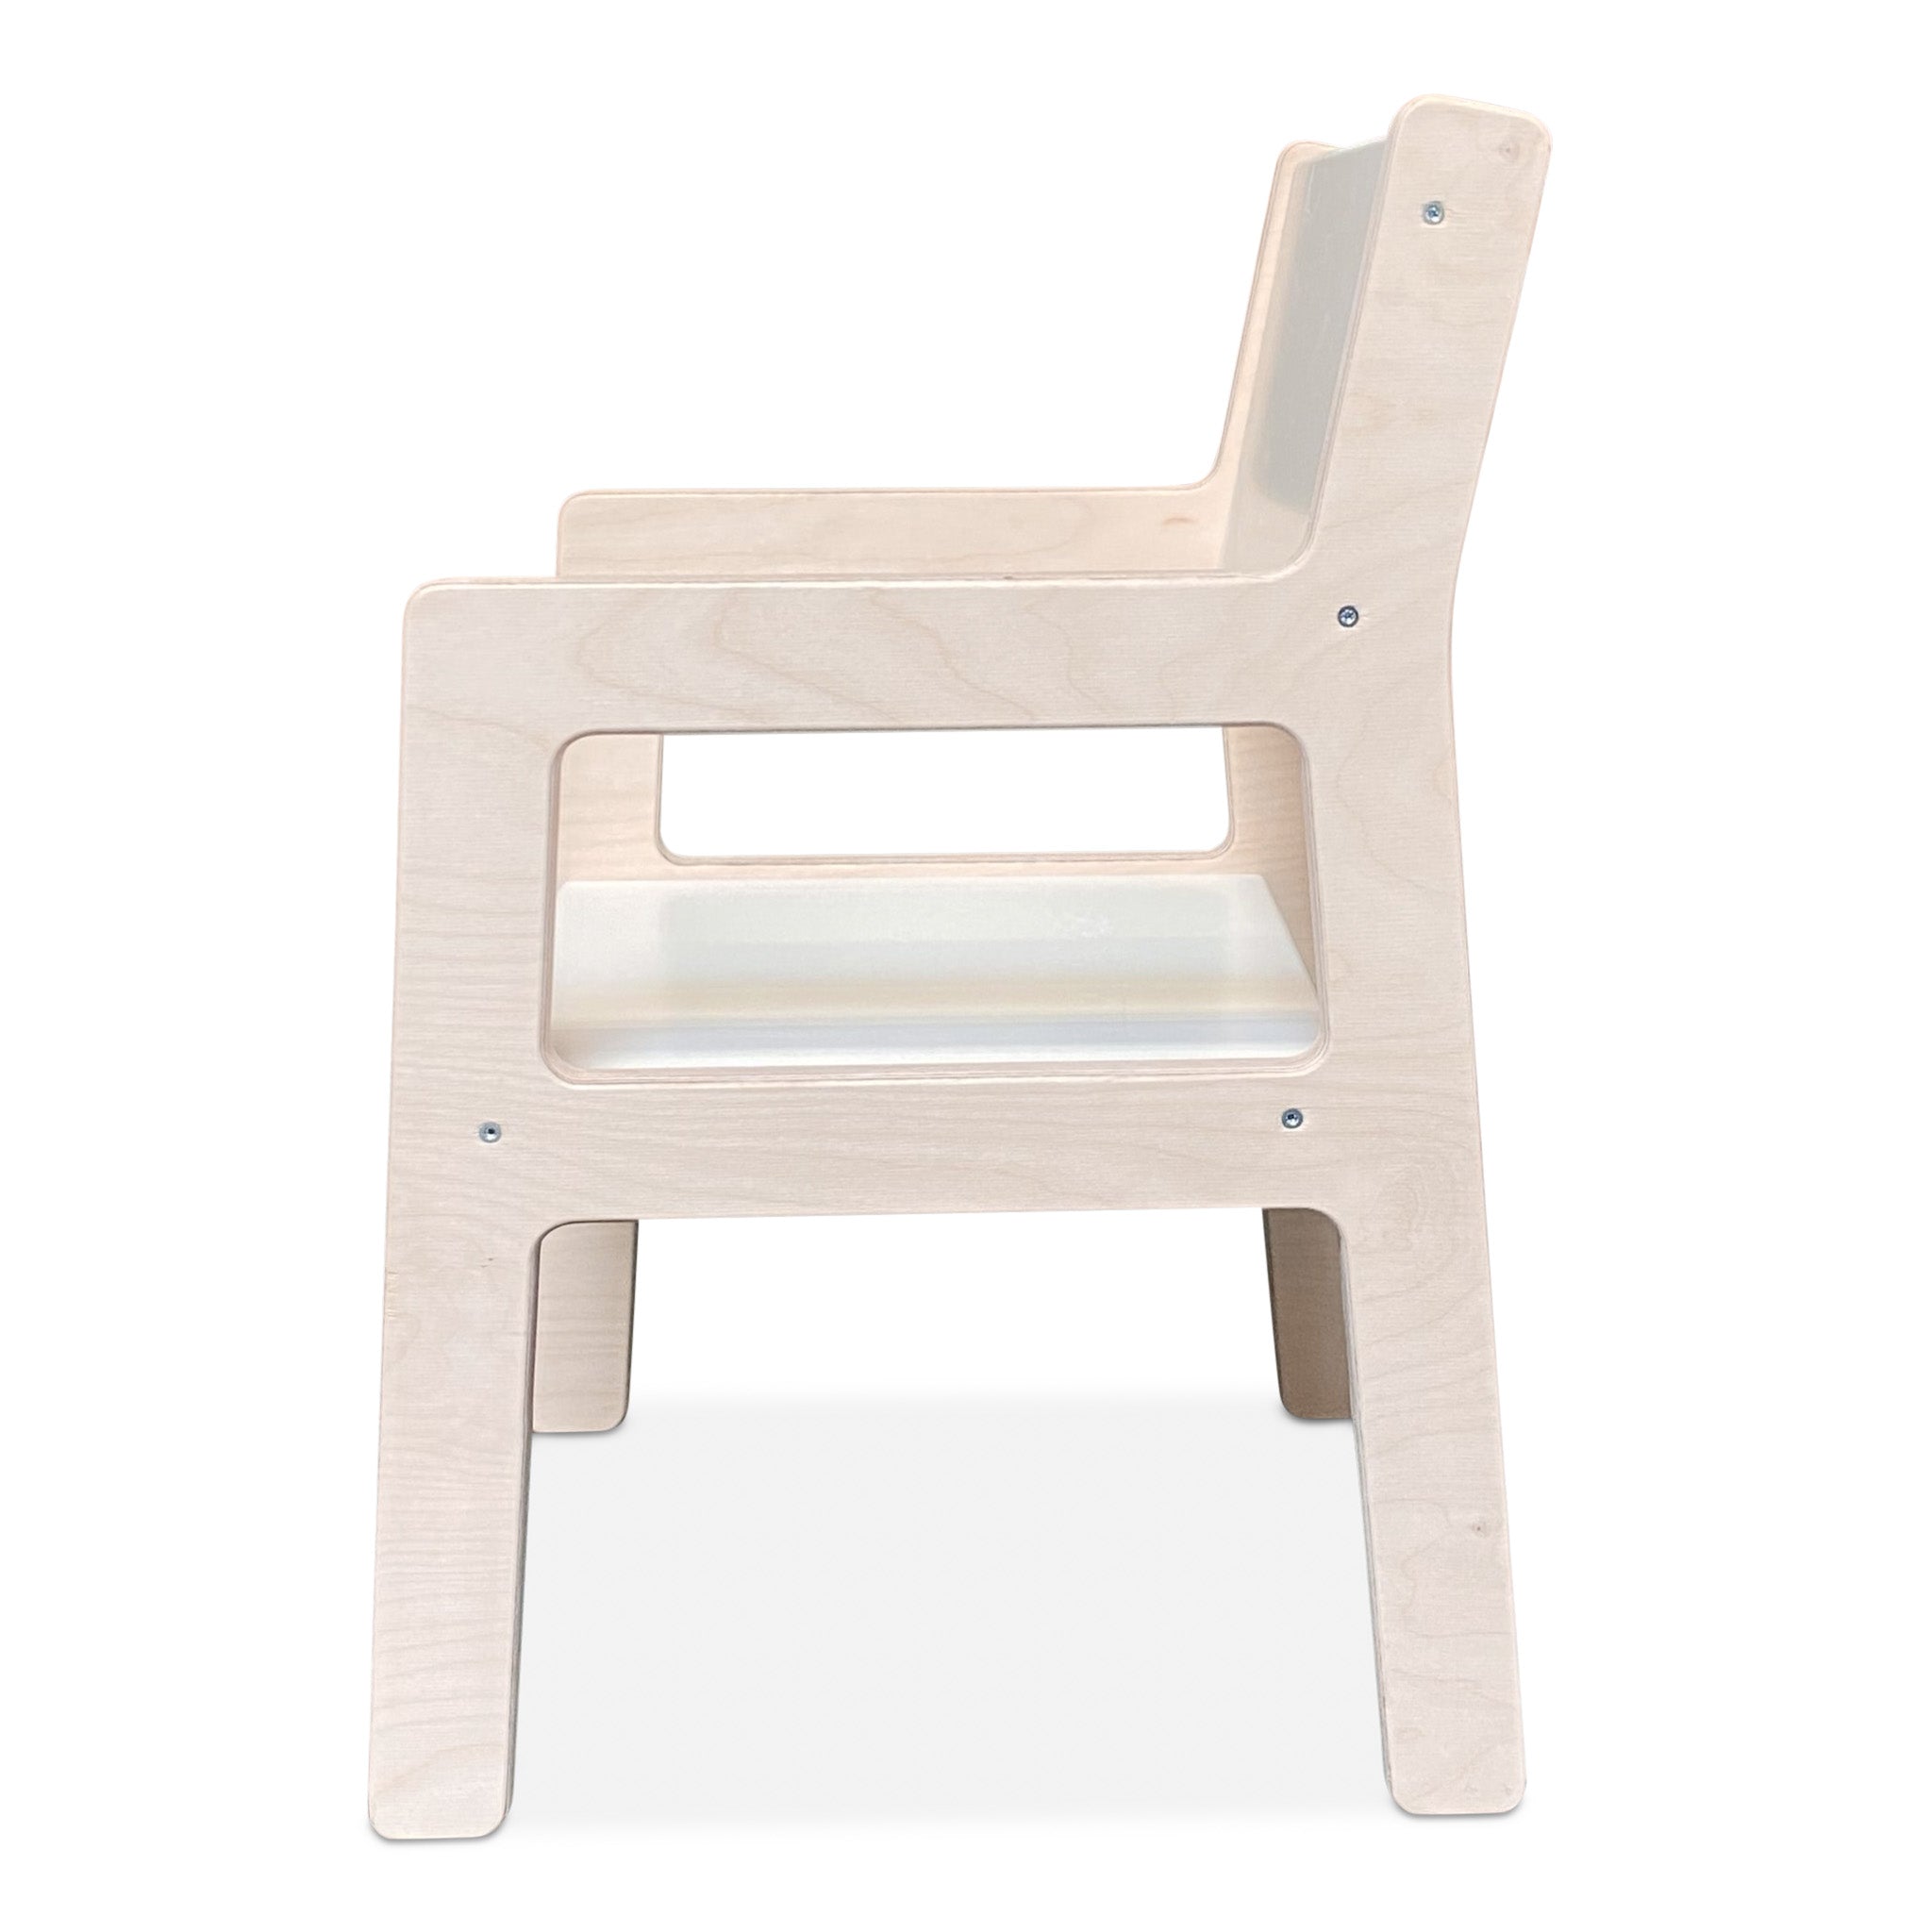 Wooden children’s chair 4-7 years | Toddler seat - white